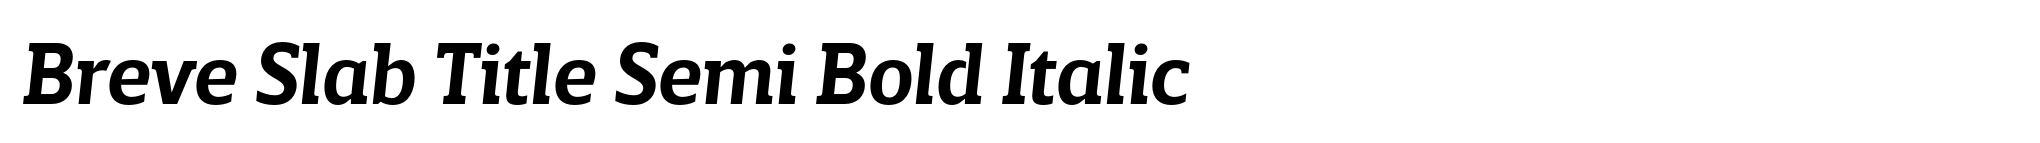 Breve Slab Title Semi Bold Italic image